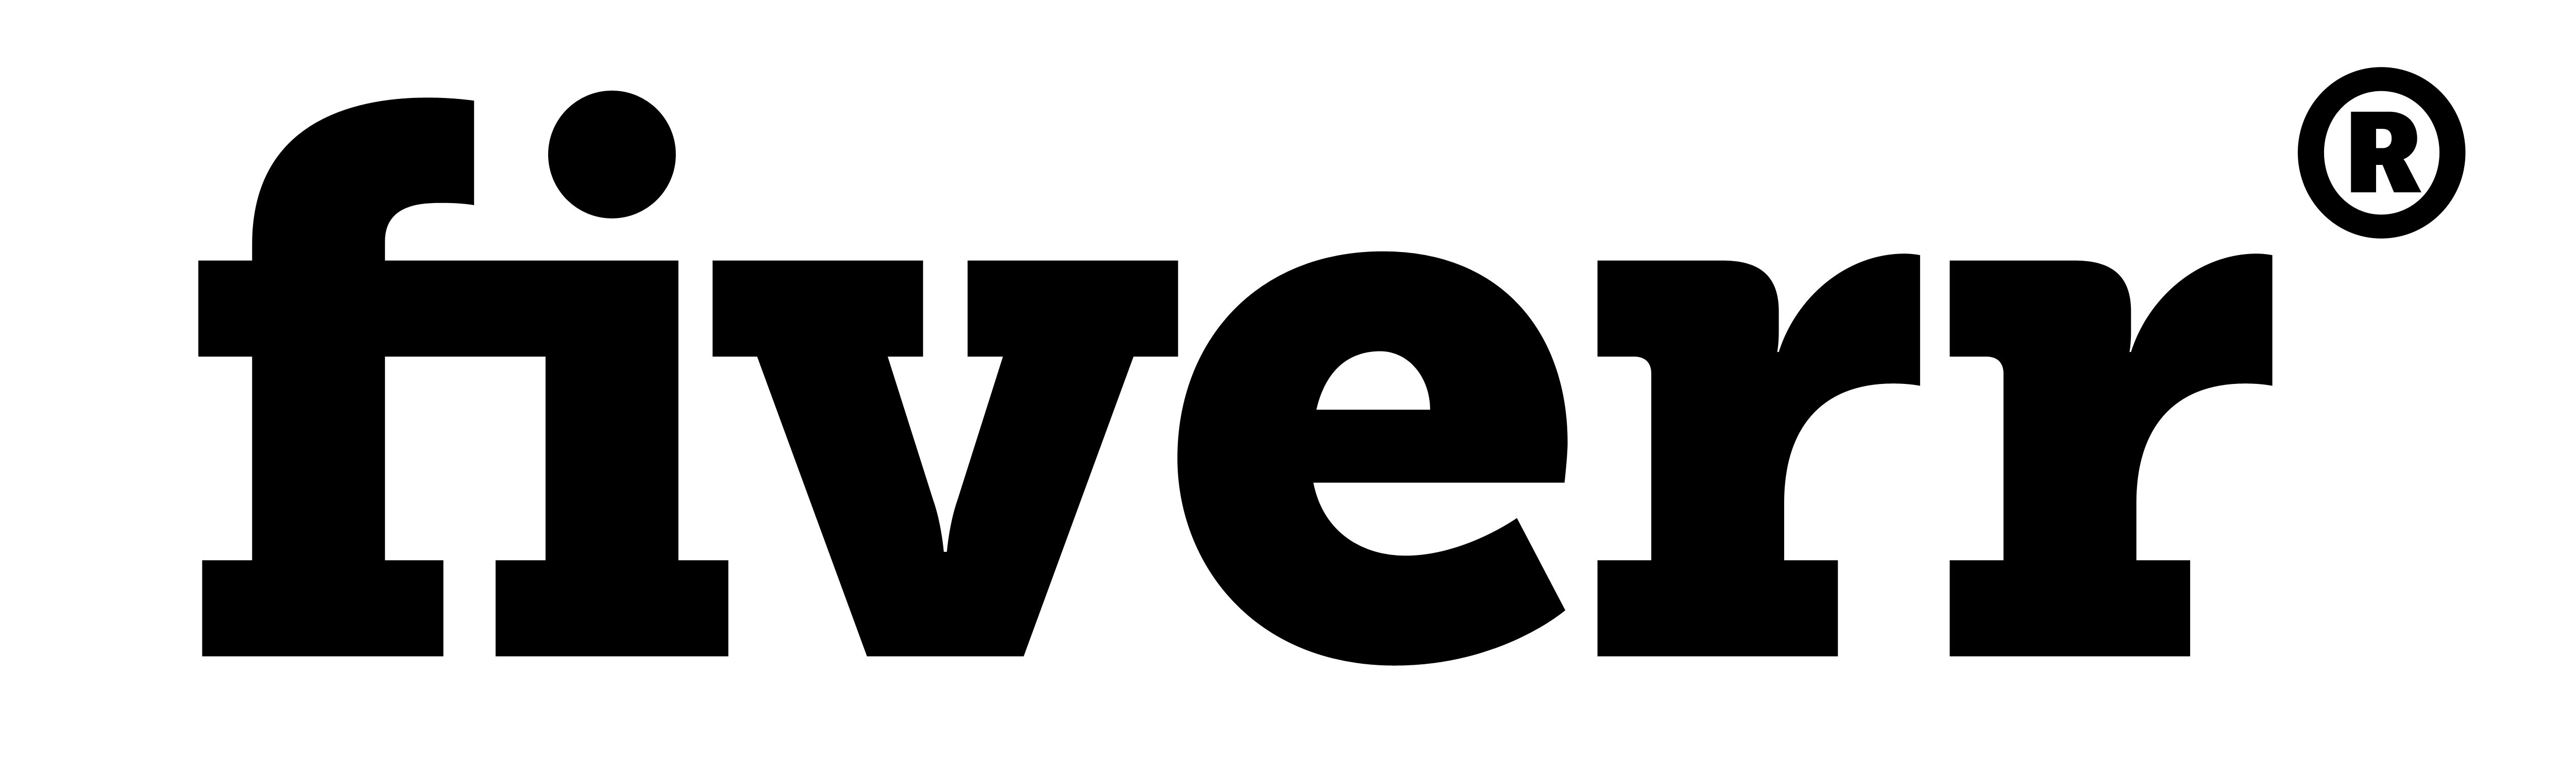 Fiverr logo erfahrungen